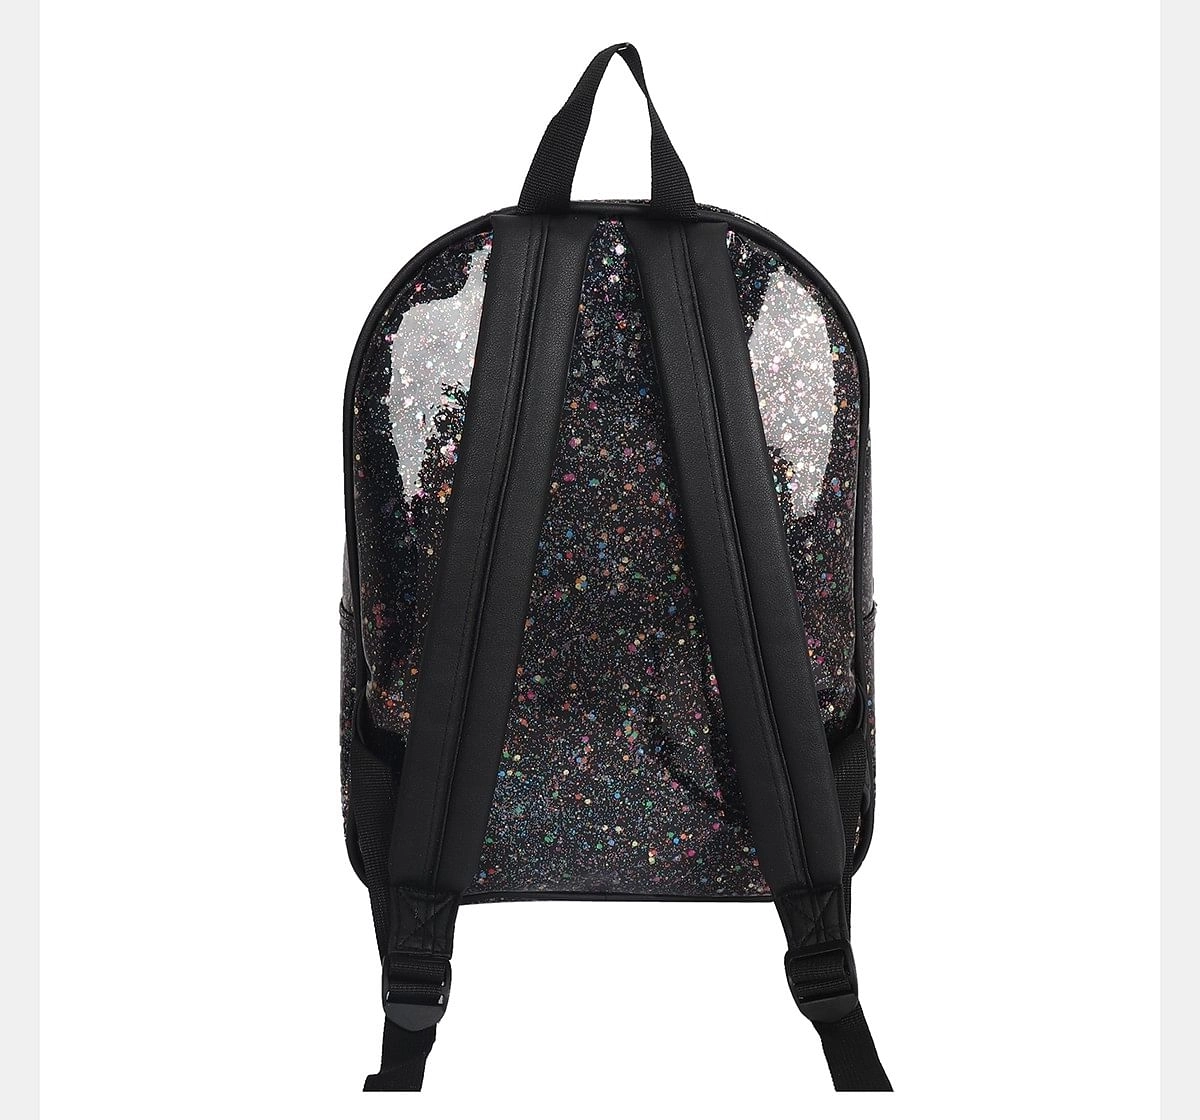 Hamster London Glitter Black Backpack, 6Y+